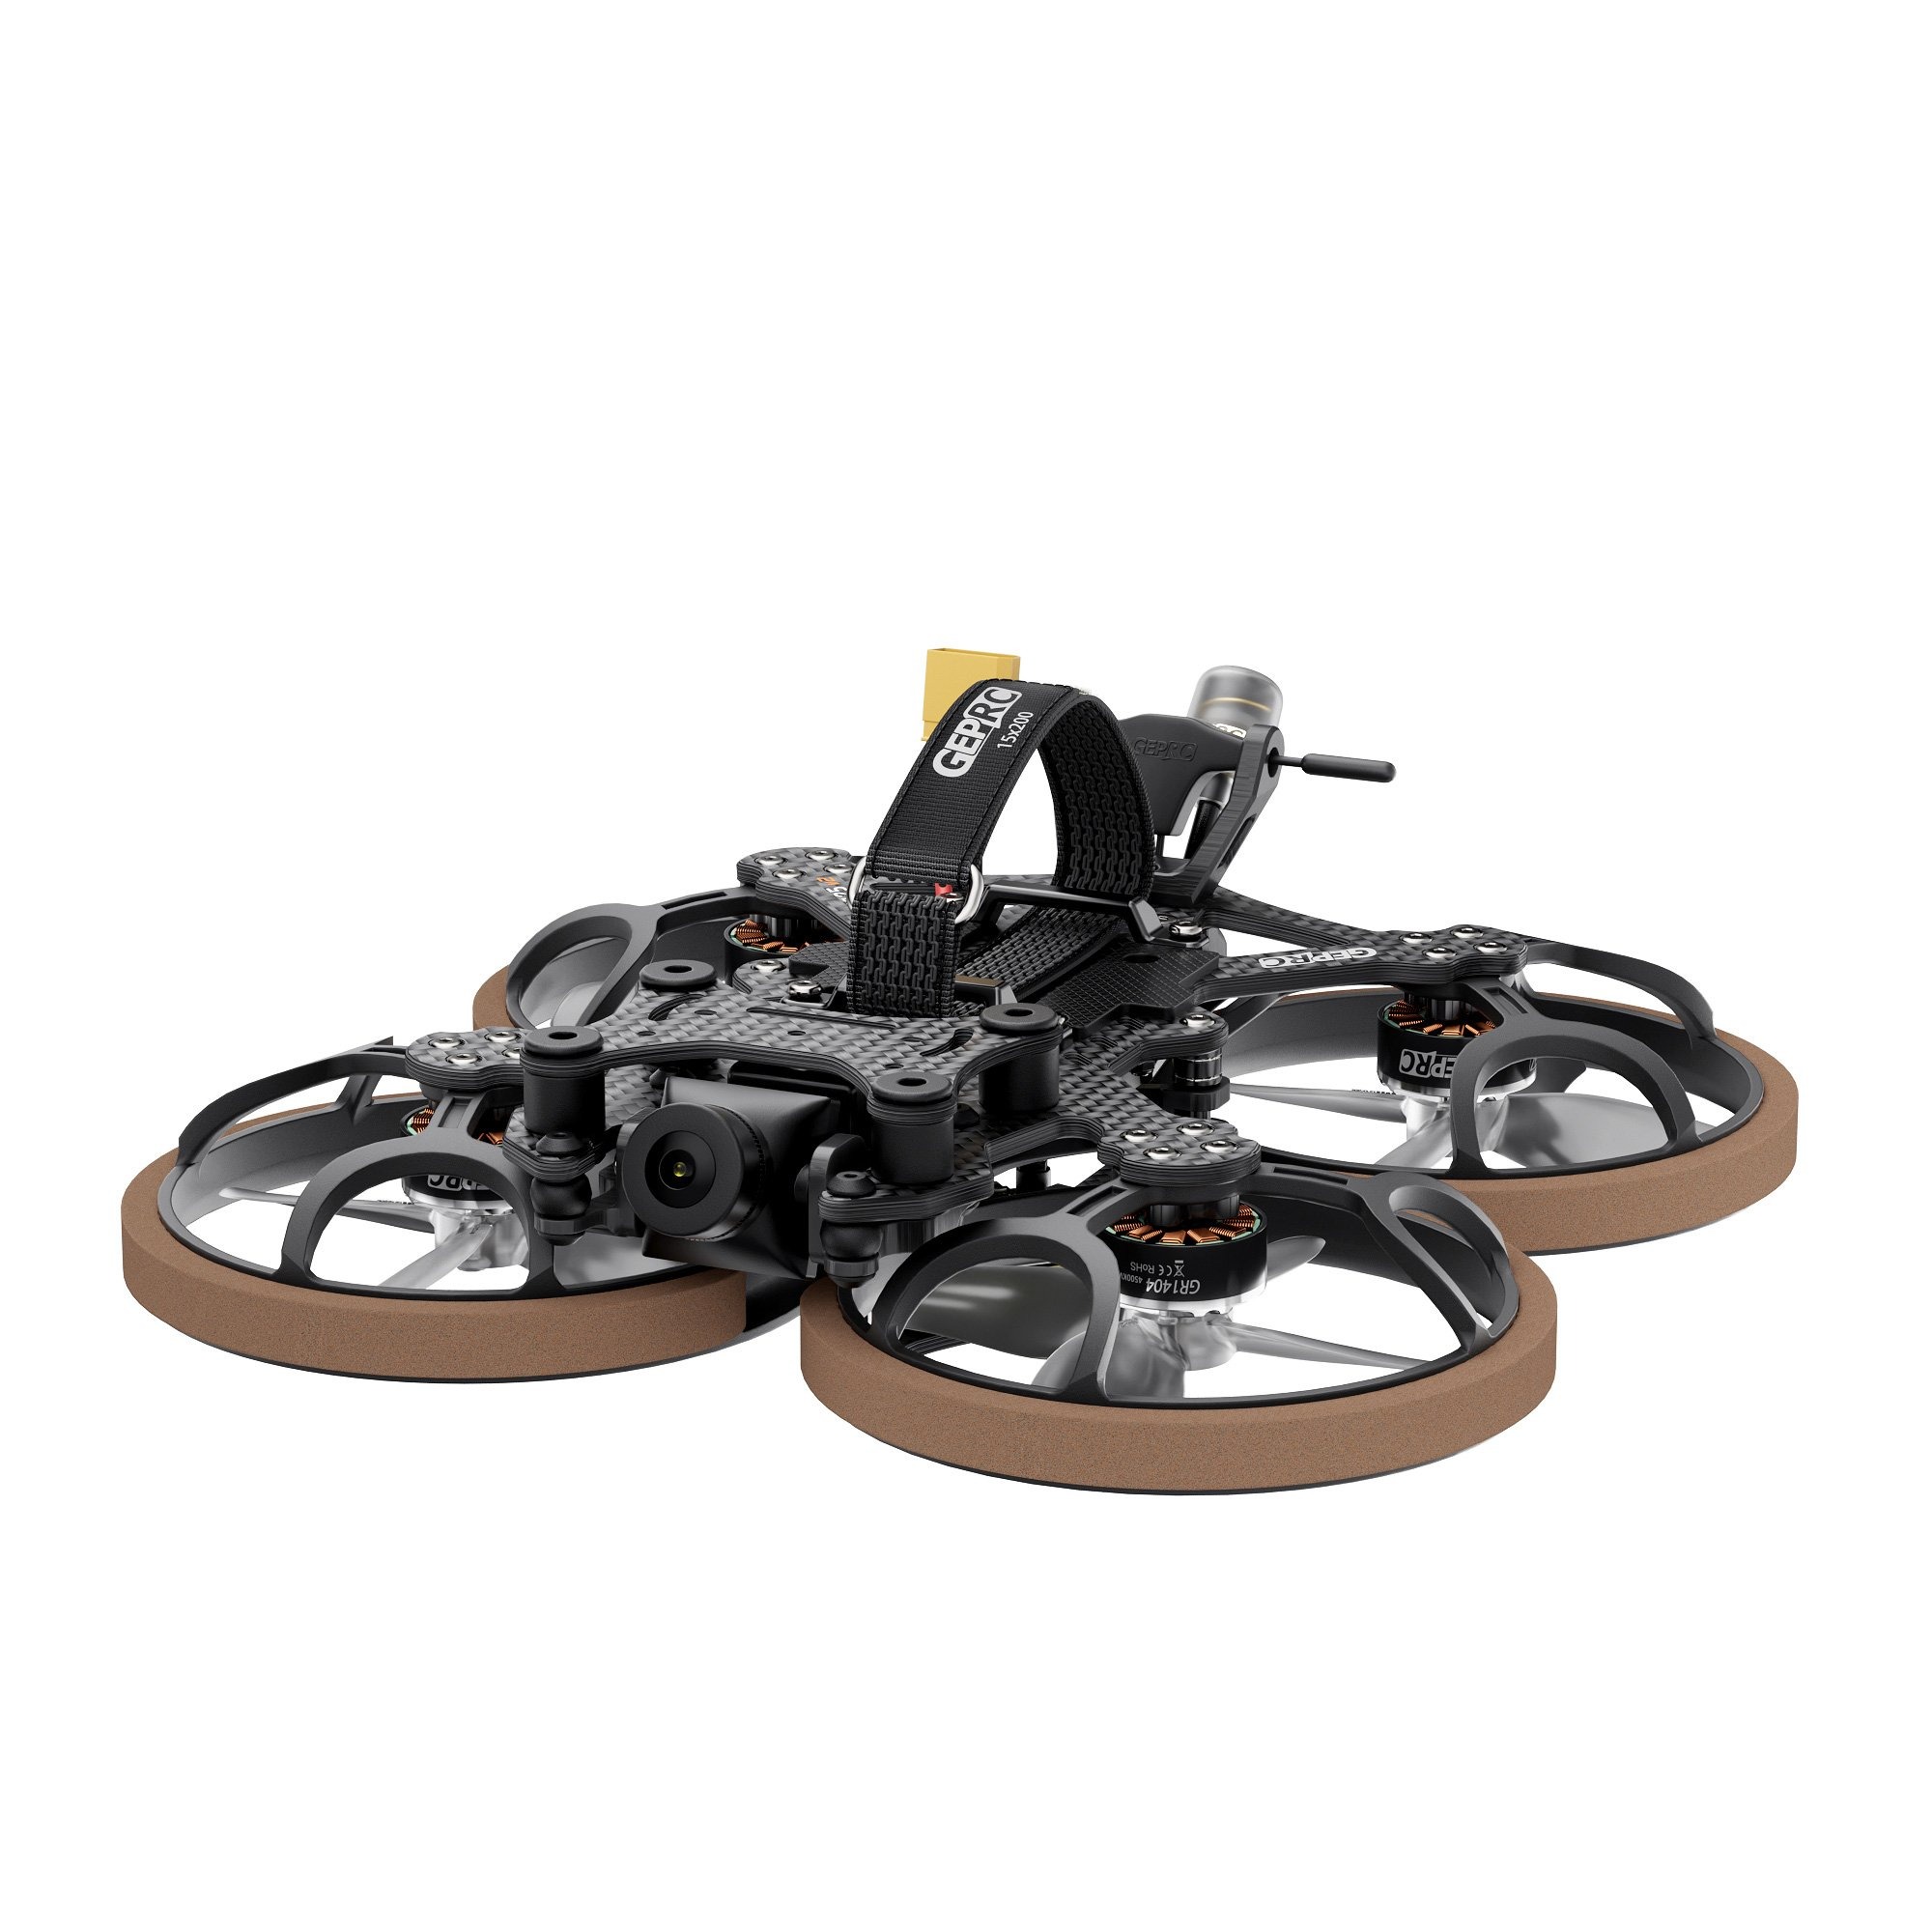 GEPRC Cinebot30 HD O3 FPV Drone 6S - ELRS 2.4G – NewBeeDrone